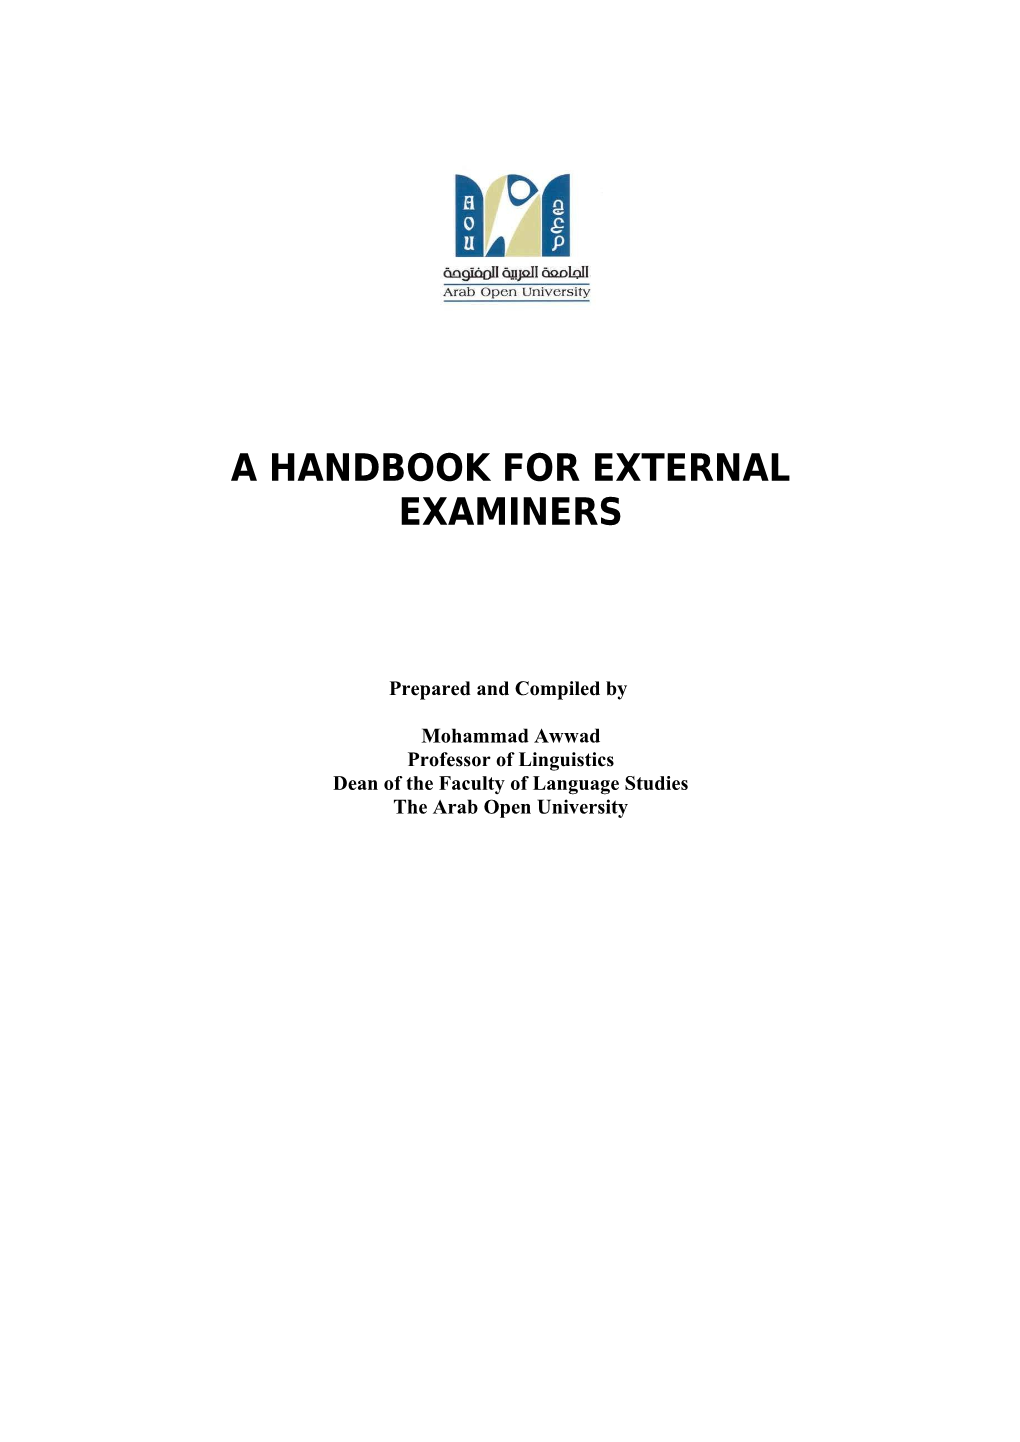 A Handbook for External Examiners